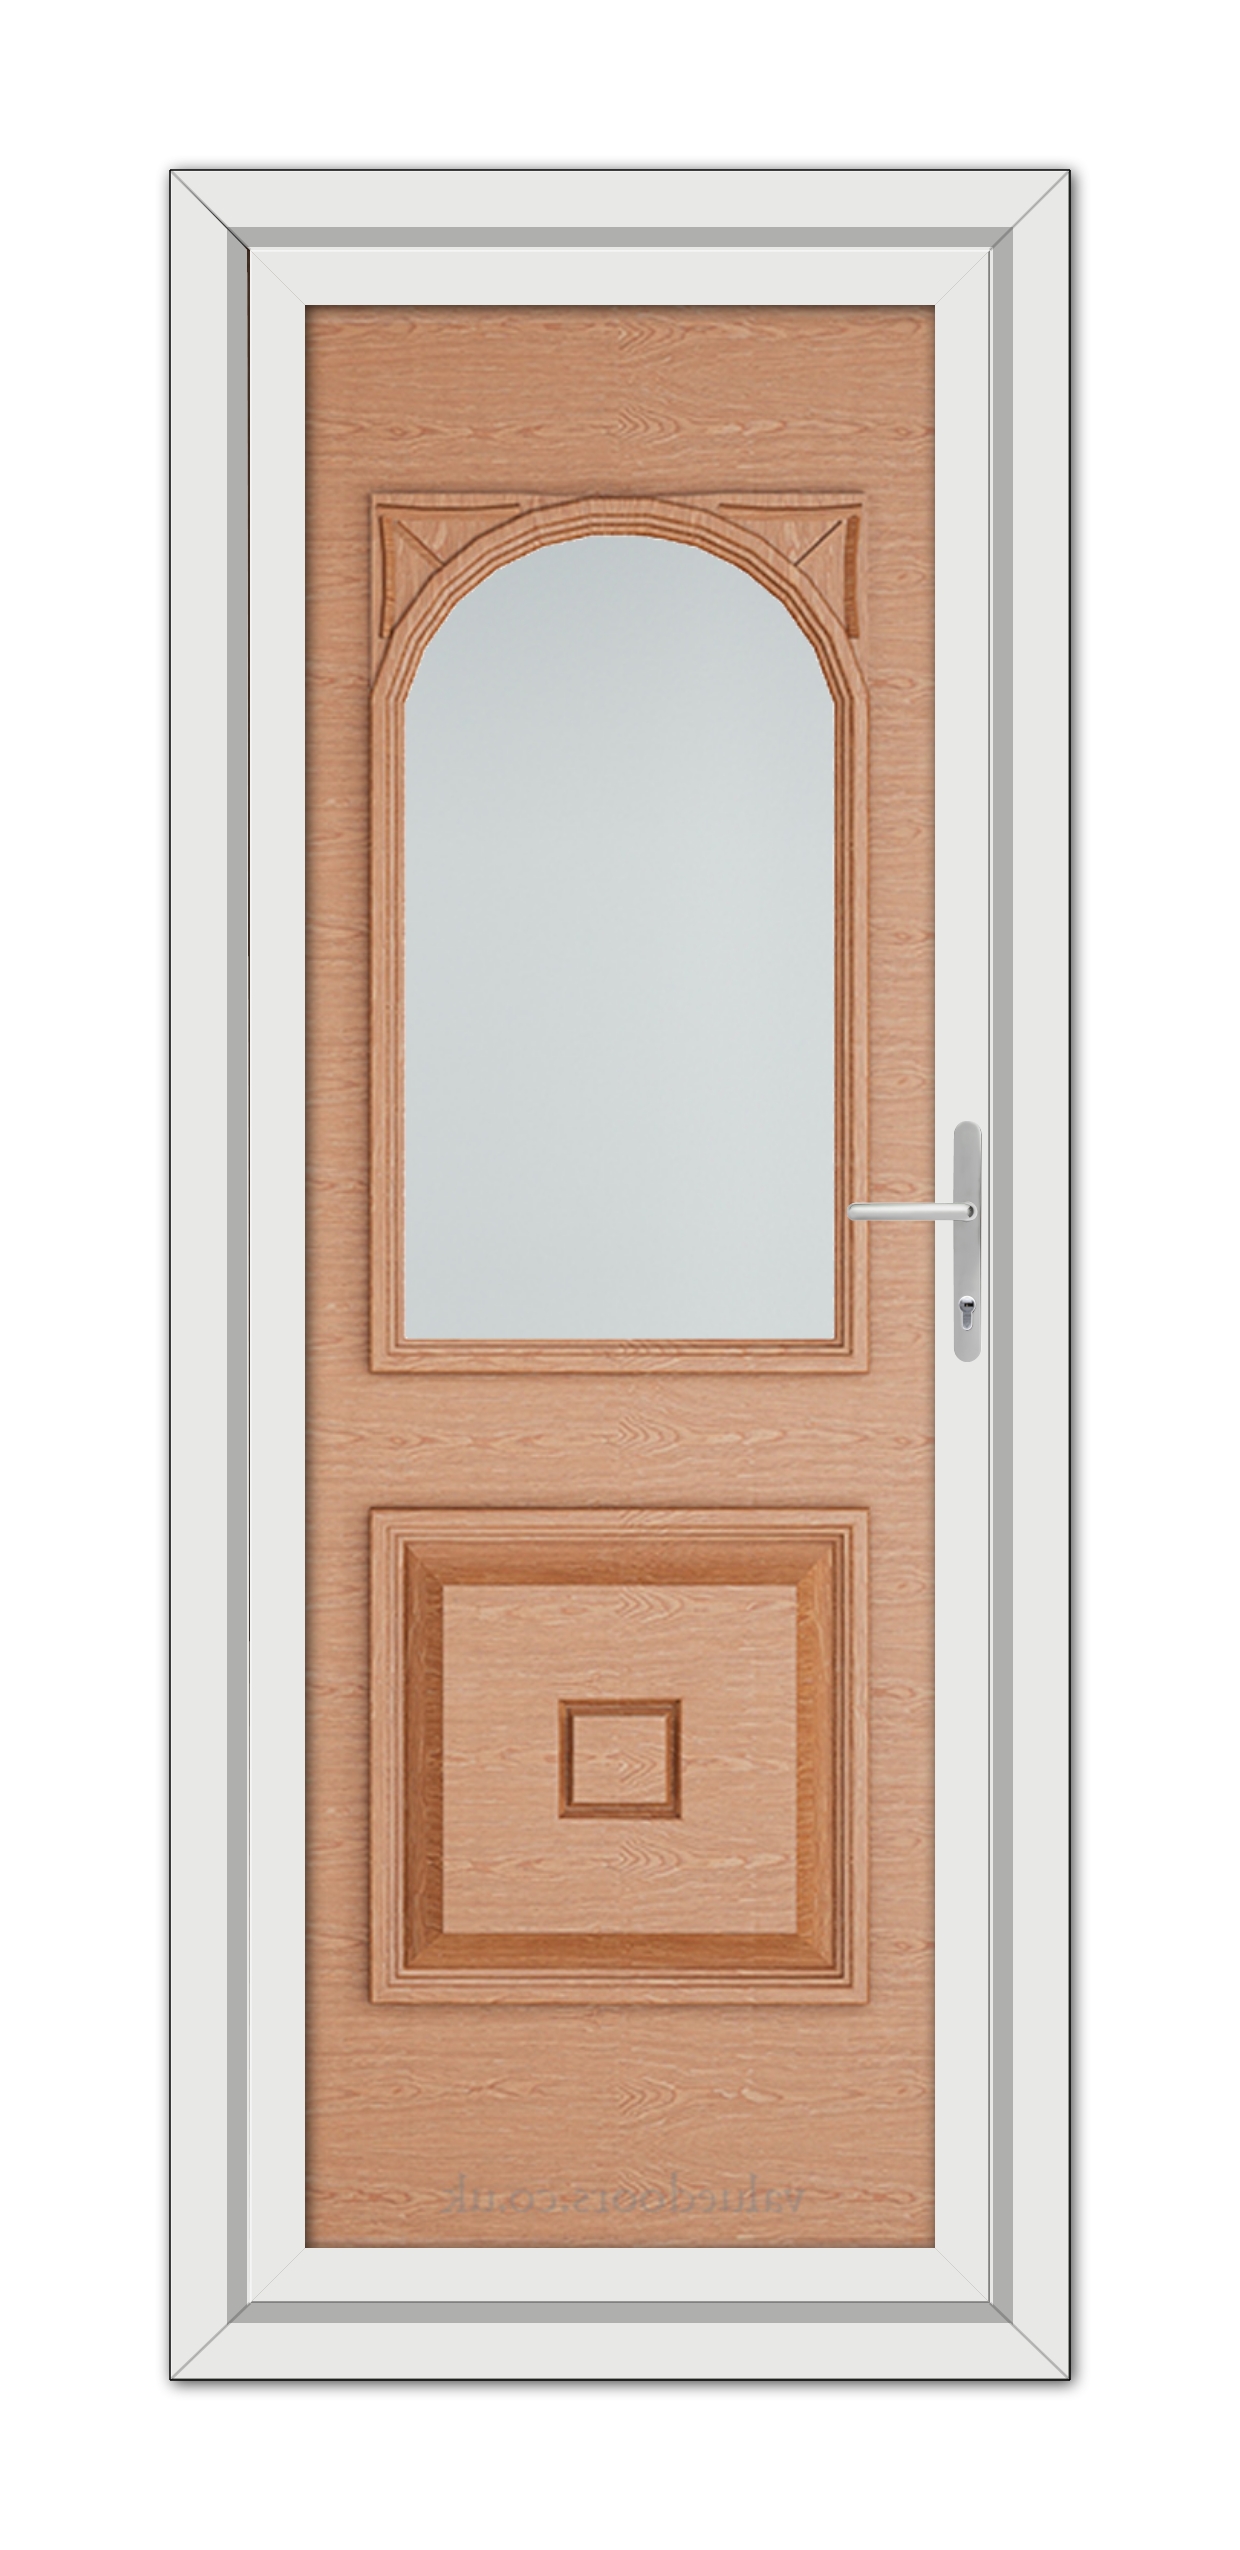 An Irish Oak Reims uPVC Door with a mirror.